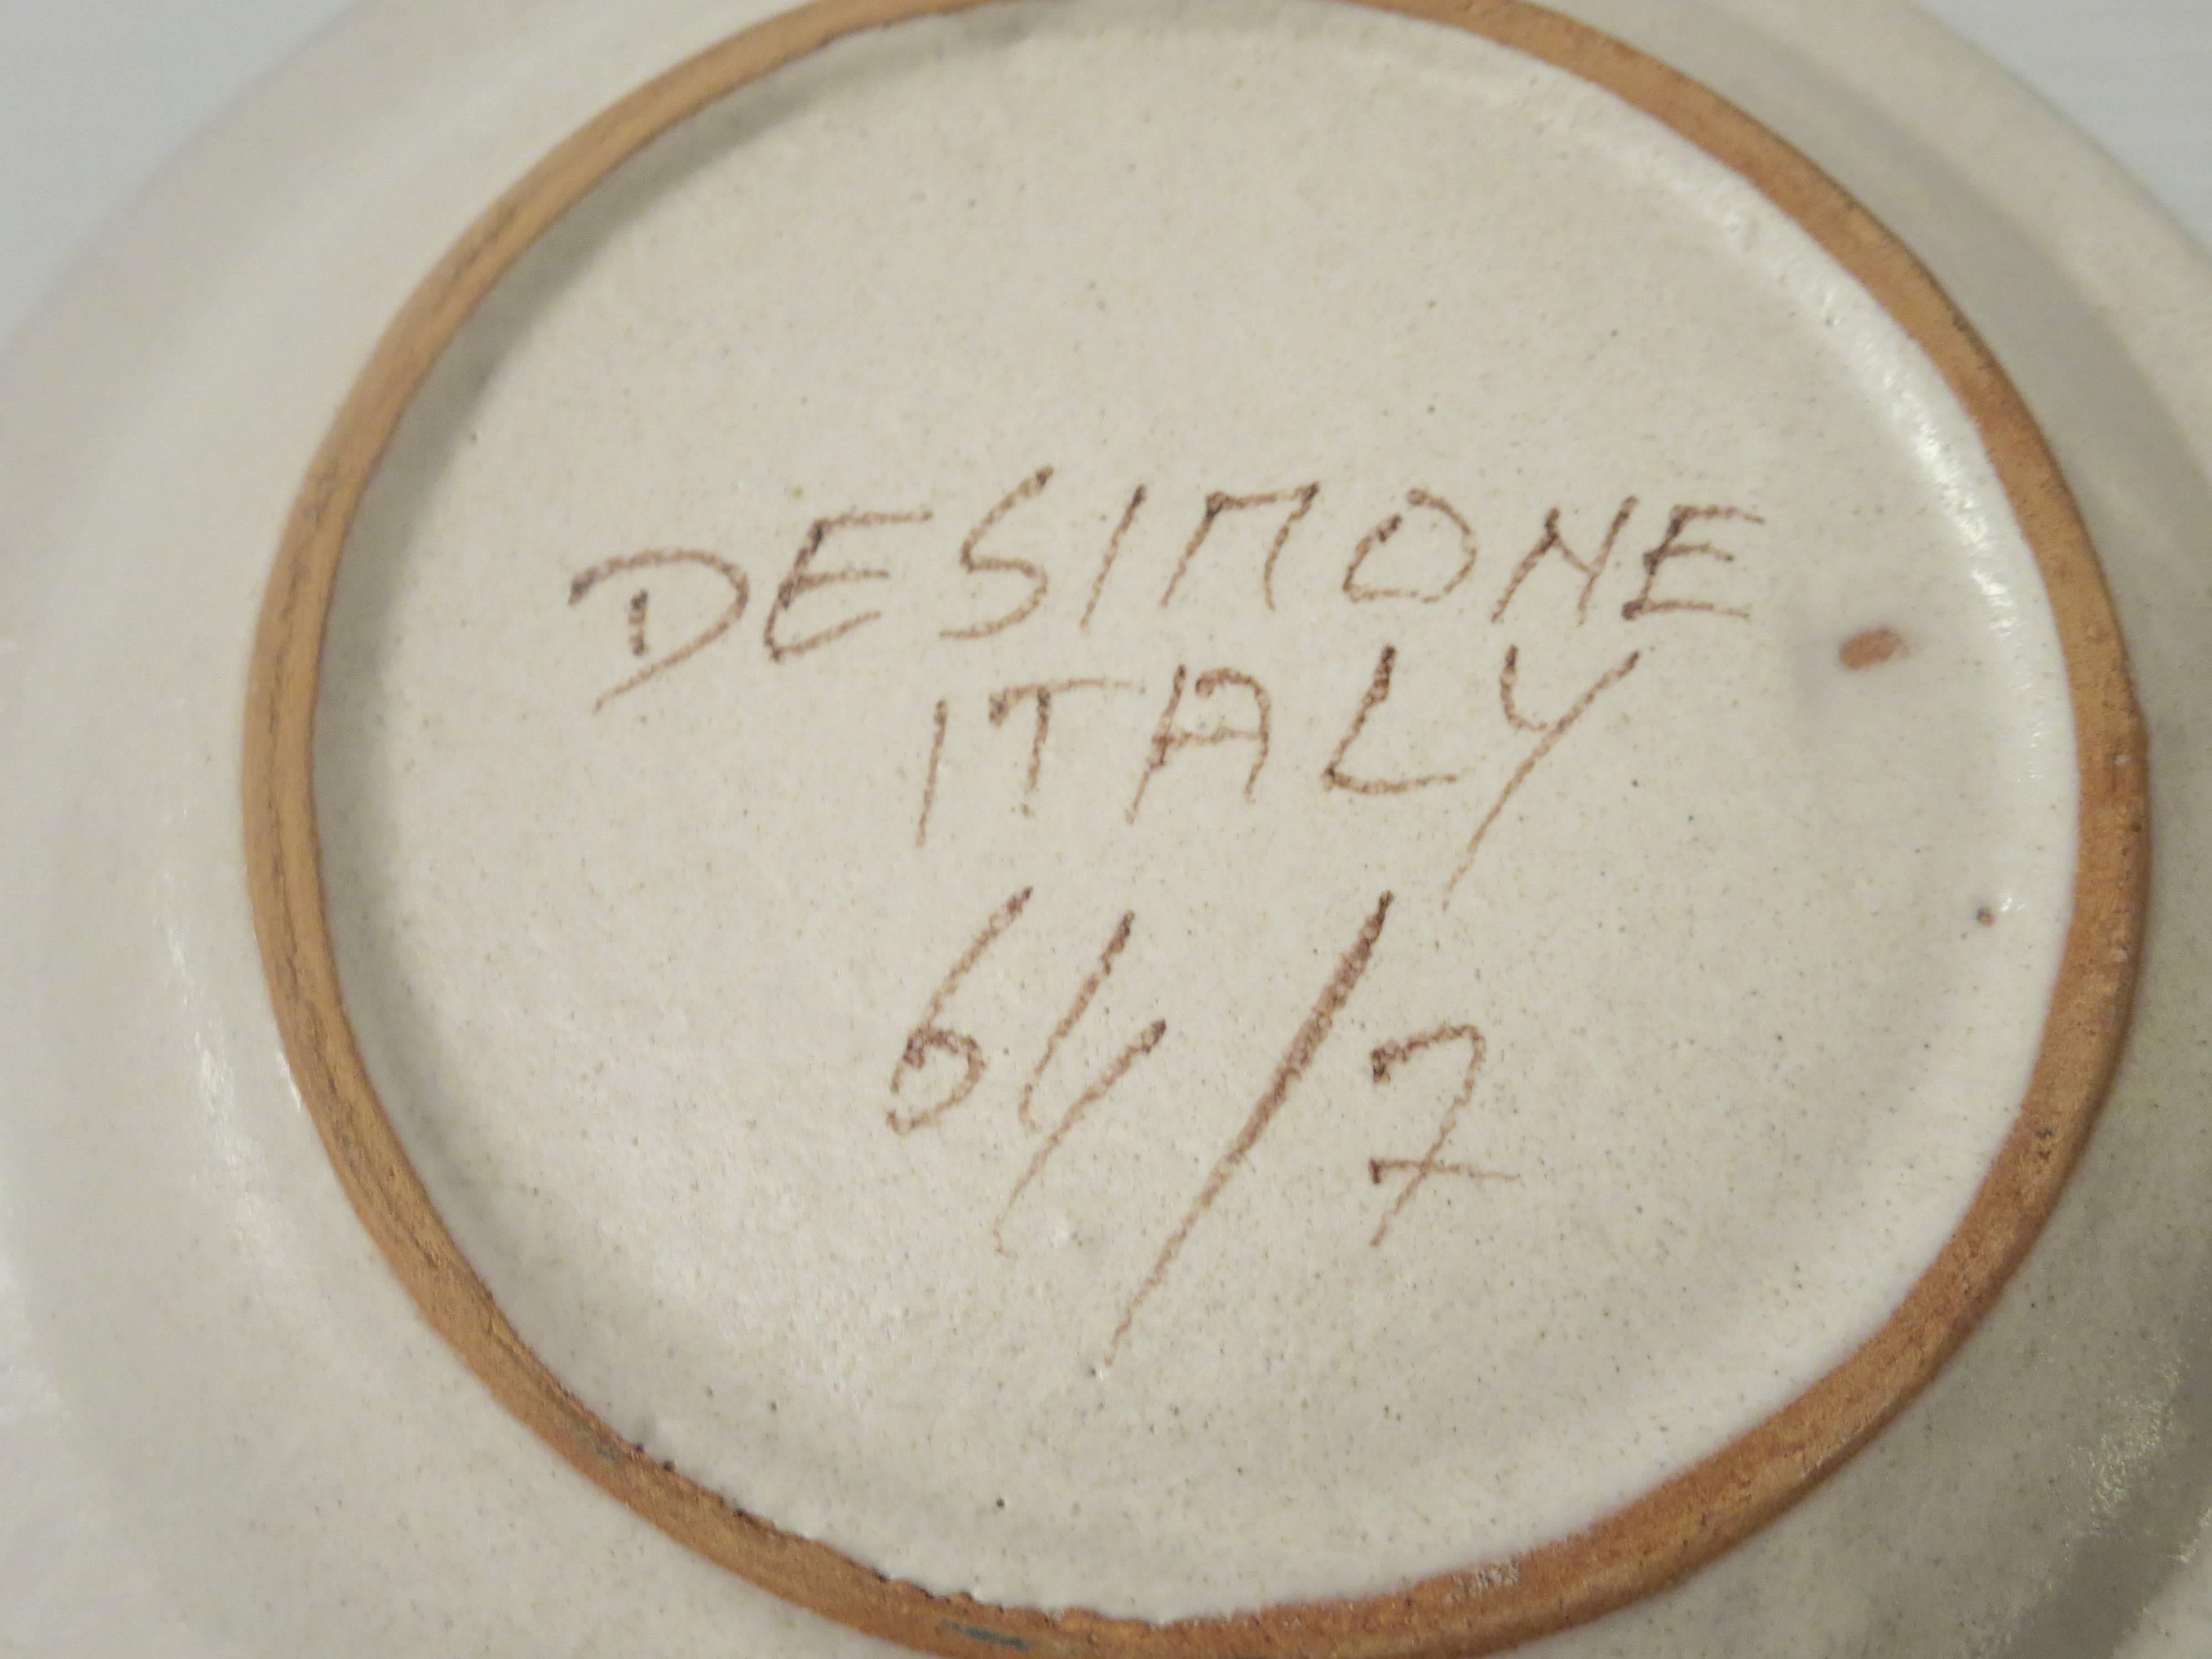 20th Century Pair of Decorative Hand-Painted Italian Ceramic Plates by DeSimone